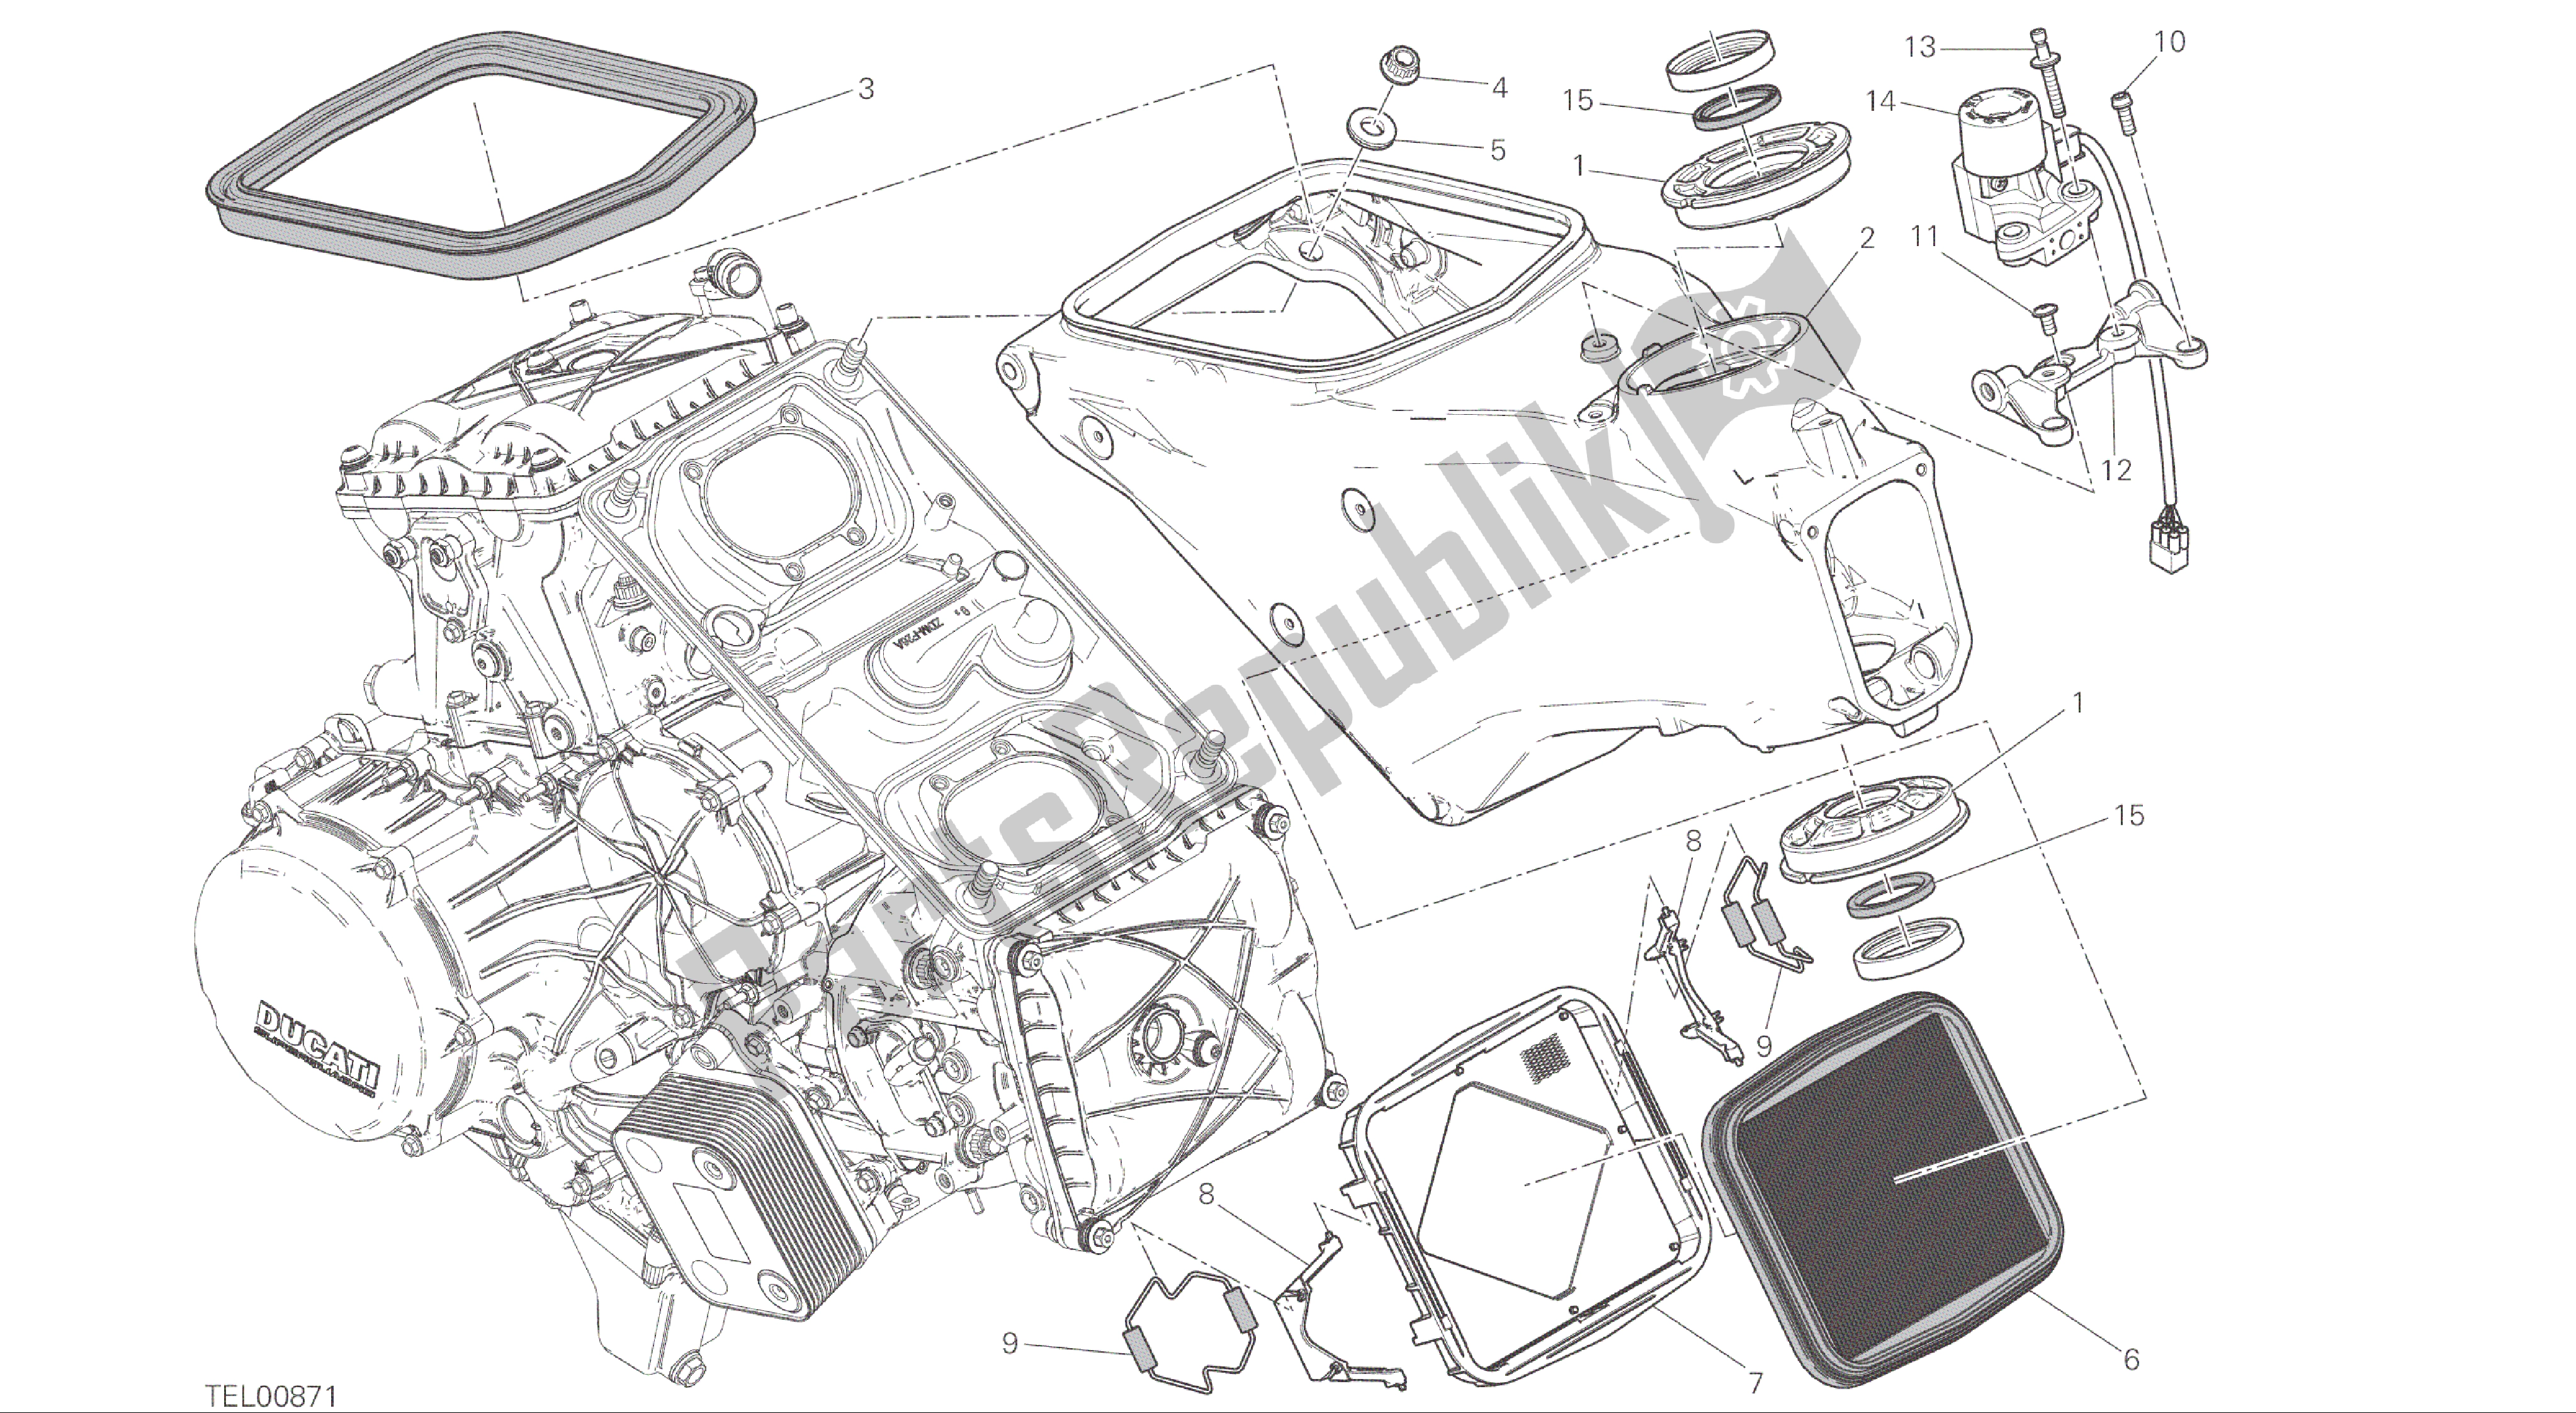 Alle onderdelen voor de Tekening 022 - Frame [mod: 1299; Xst: Aus, Eur, Fra, Jap, Twn] Groepsframe van de Ducati Panigale ABS 1299 2016